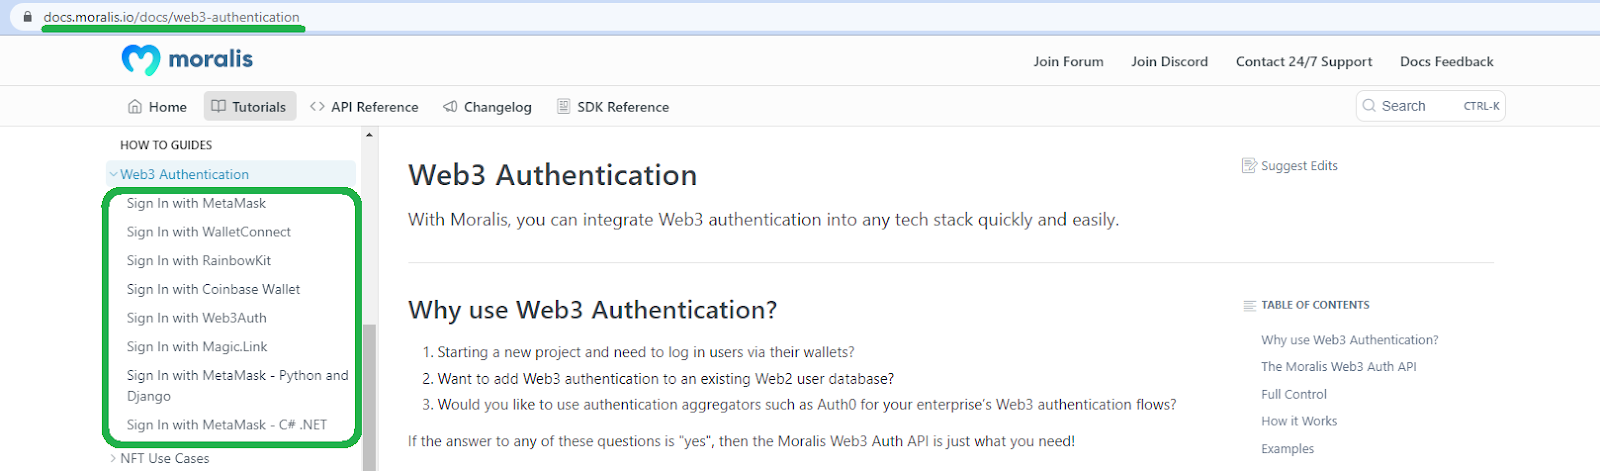 Moralis authentication documentation page.